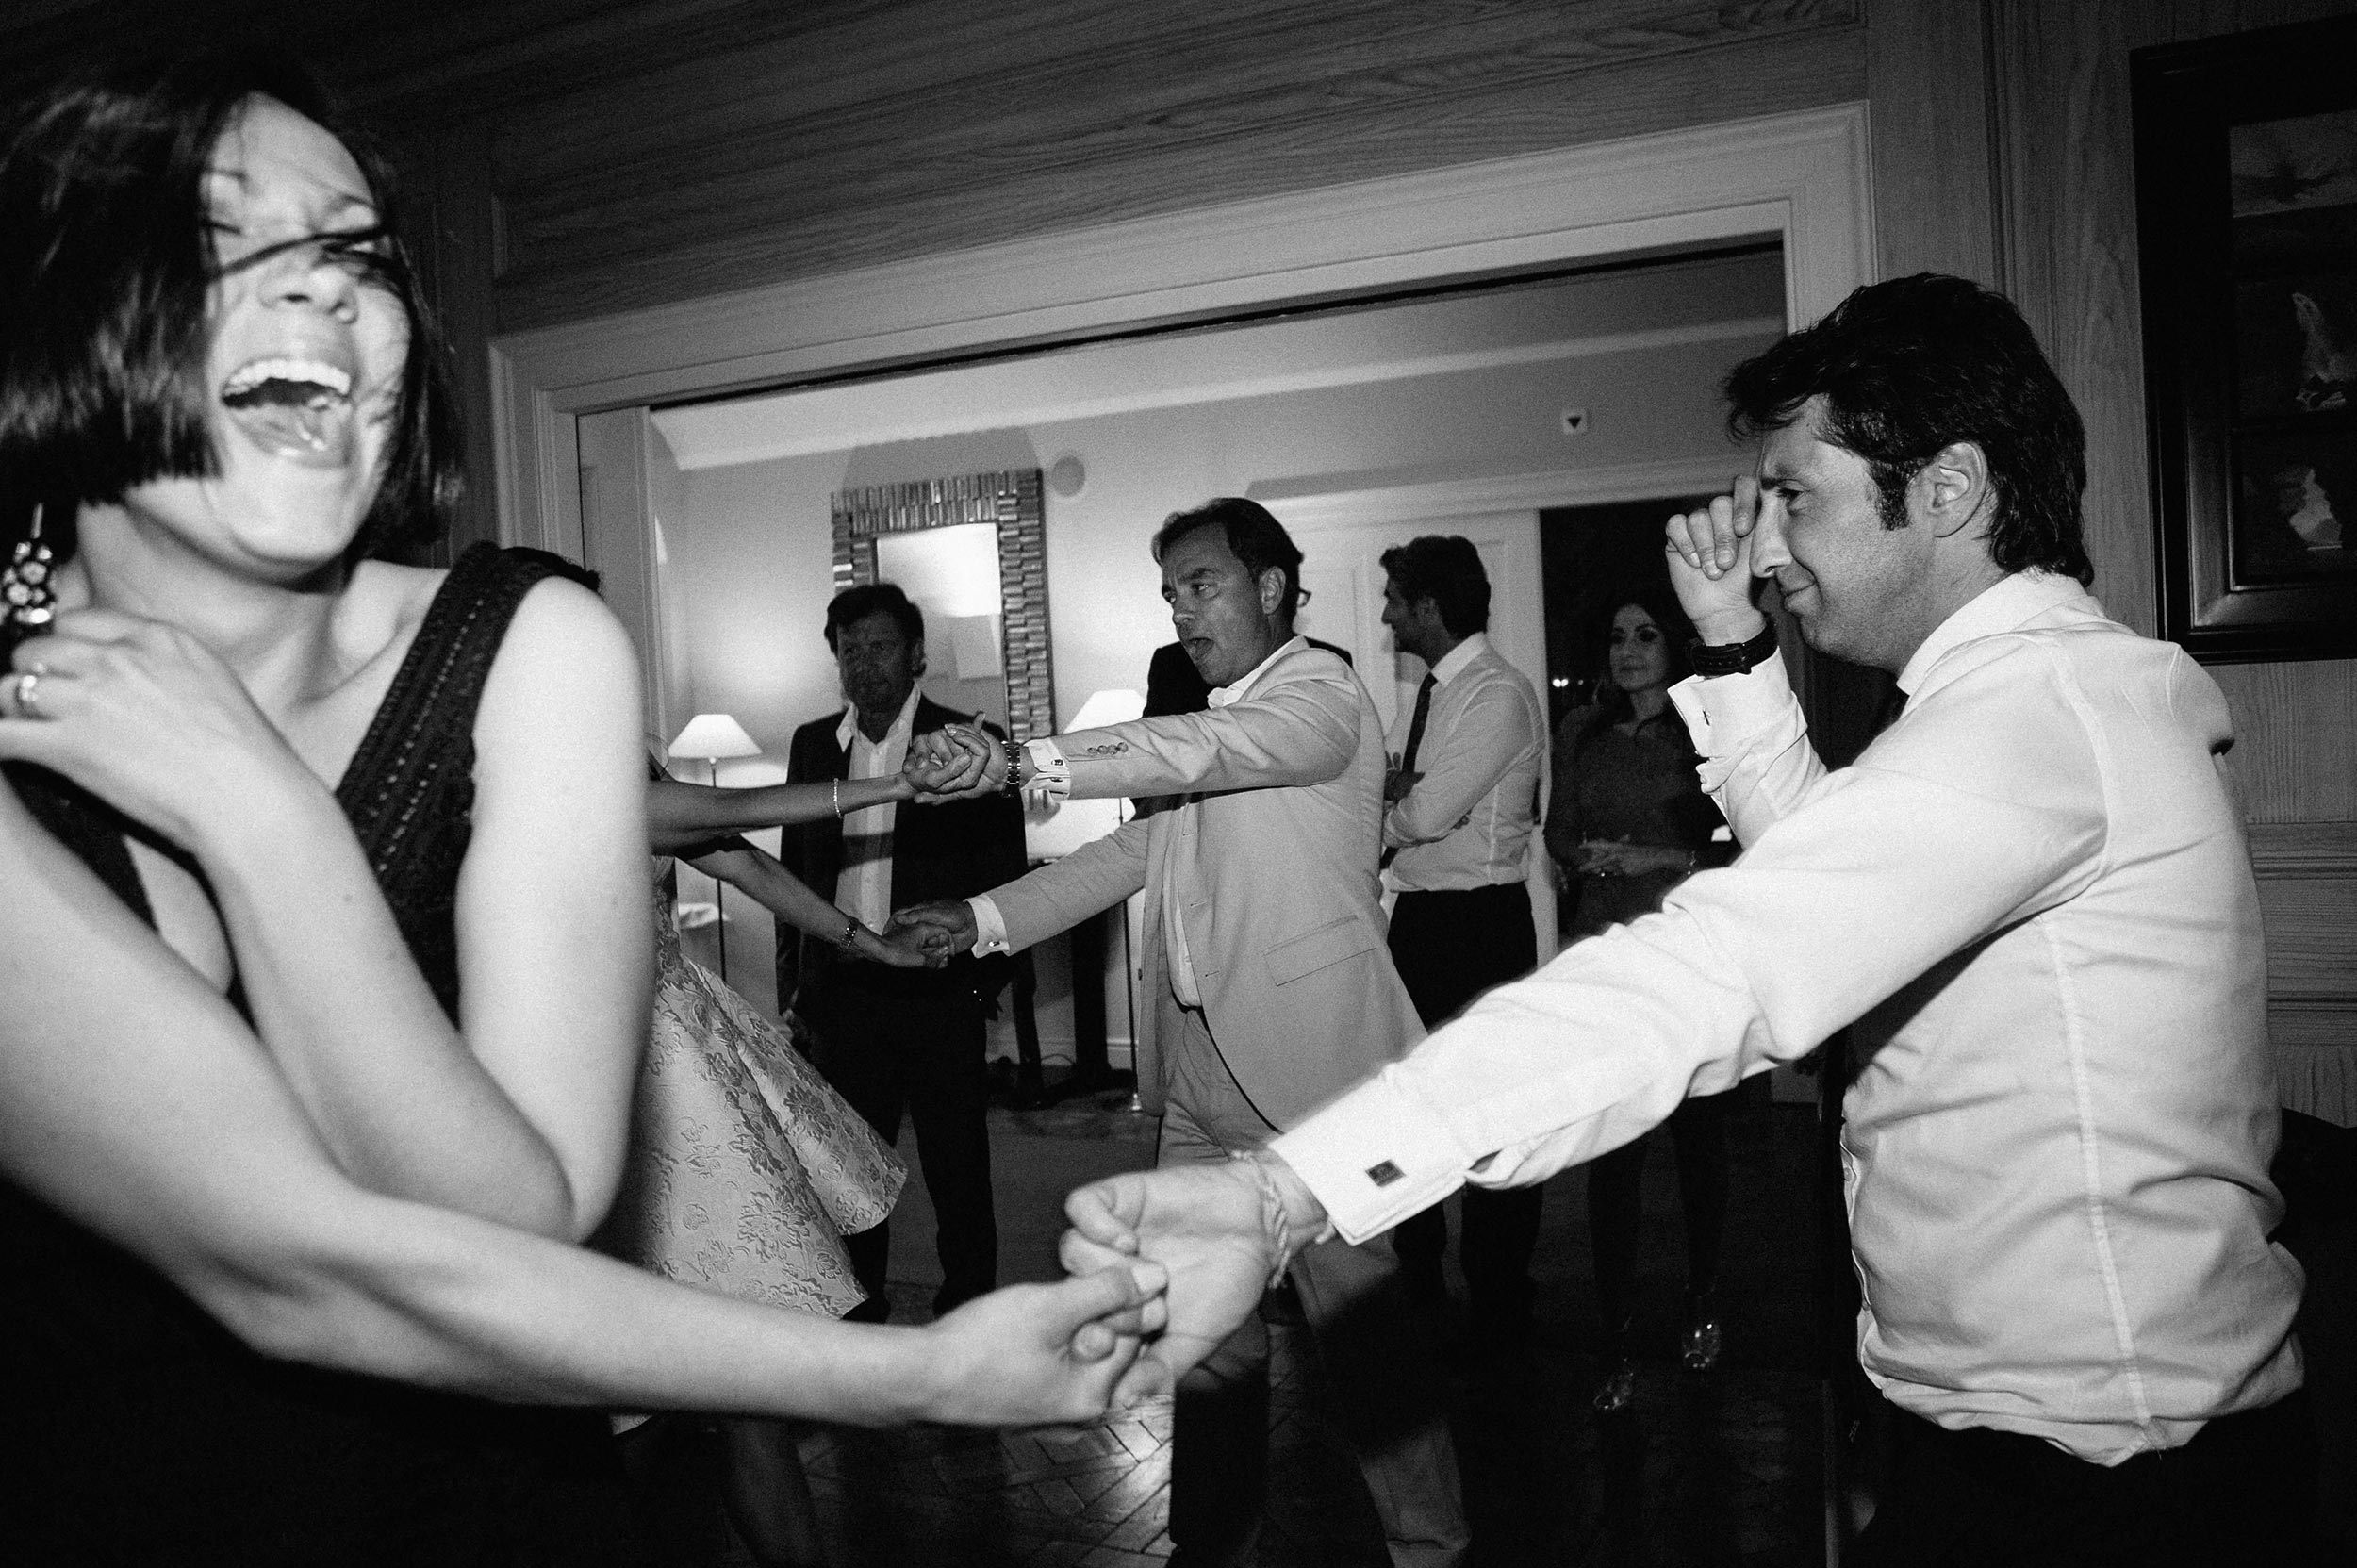 crazy-dancing-during-wedding-reception-switzerland-black-and-white-black-and-white-wedding-photography.jpg